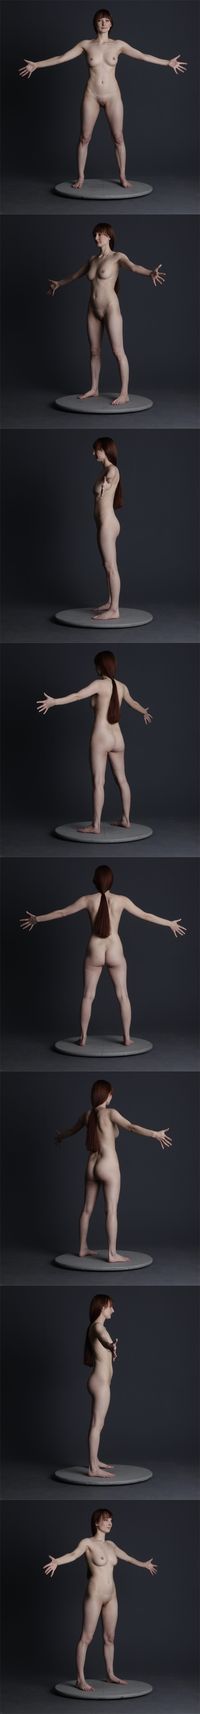 Nude figure drawing pose reference turn-around by http://mjranum-stock.deviantart.com